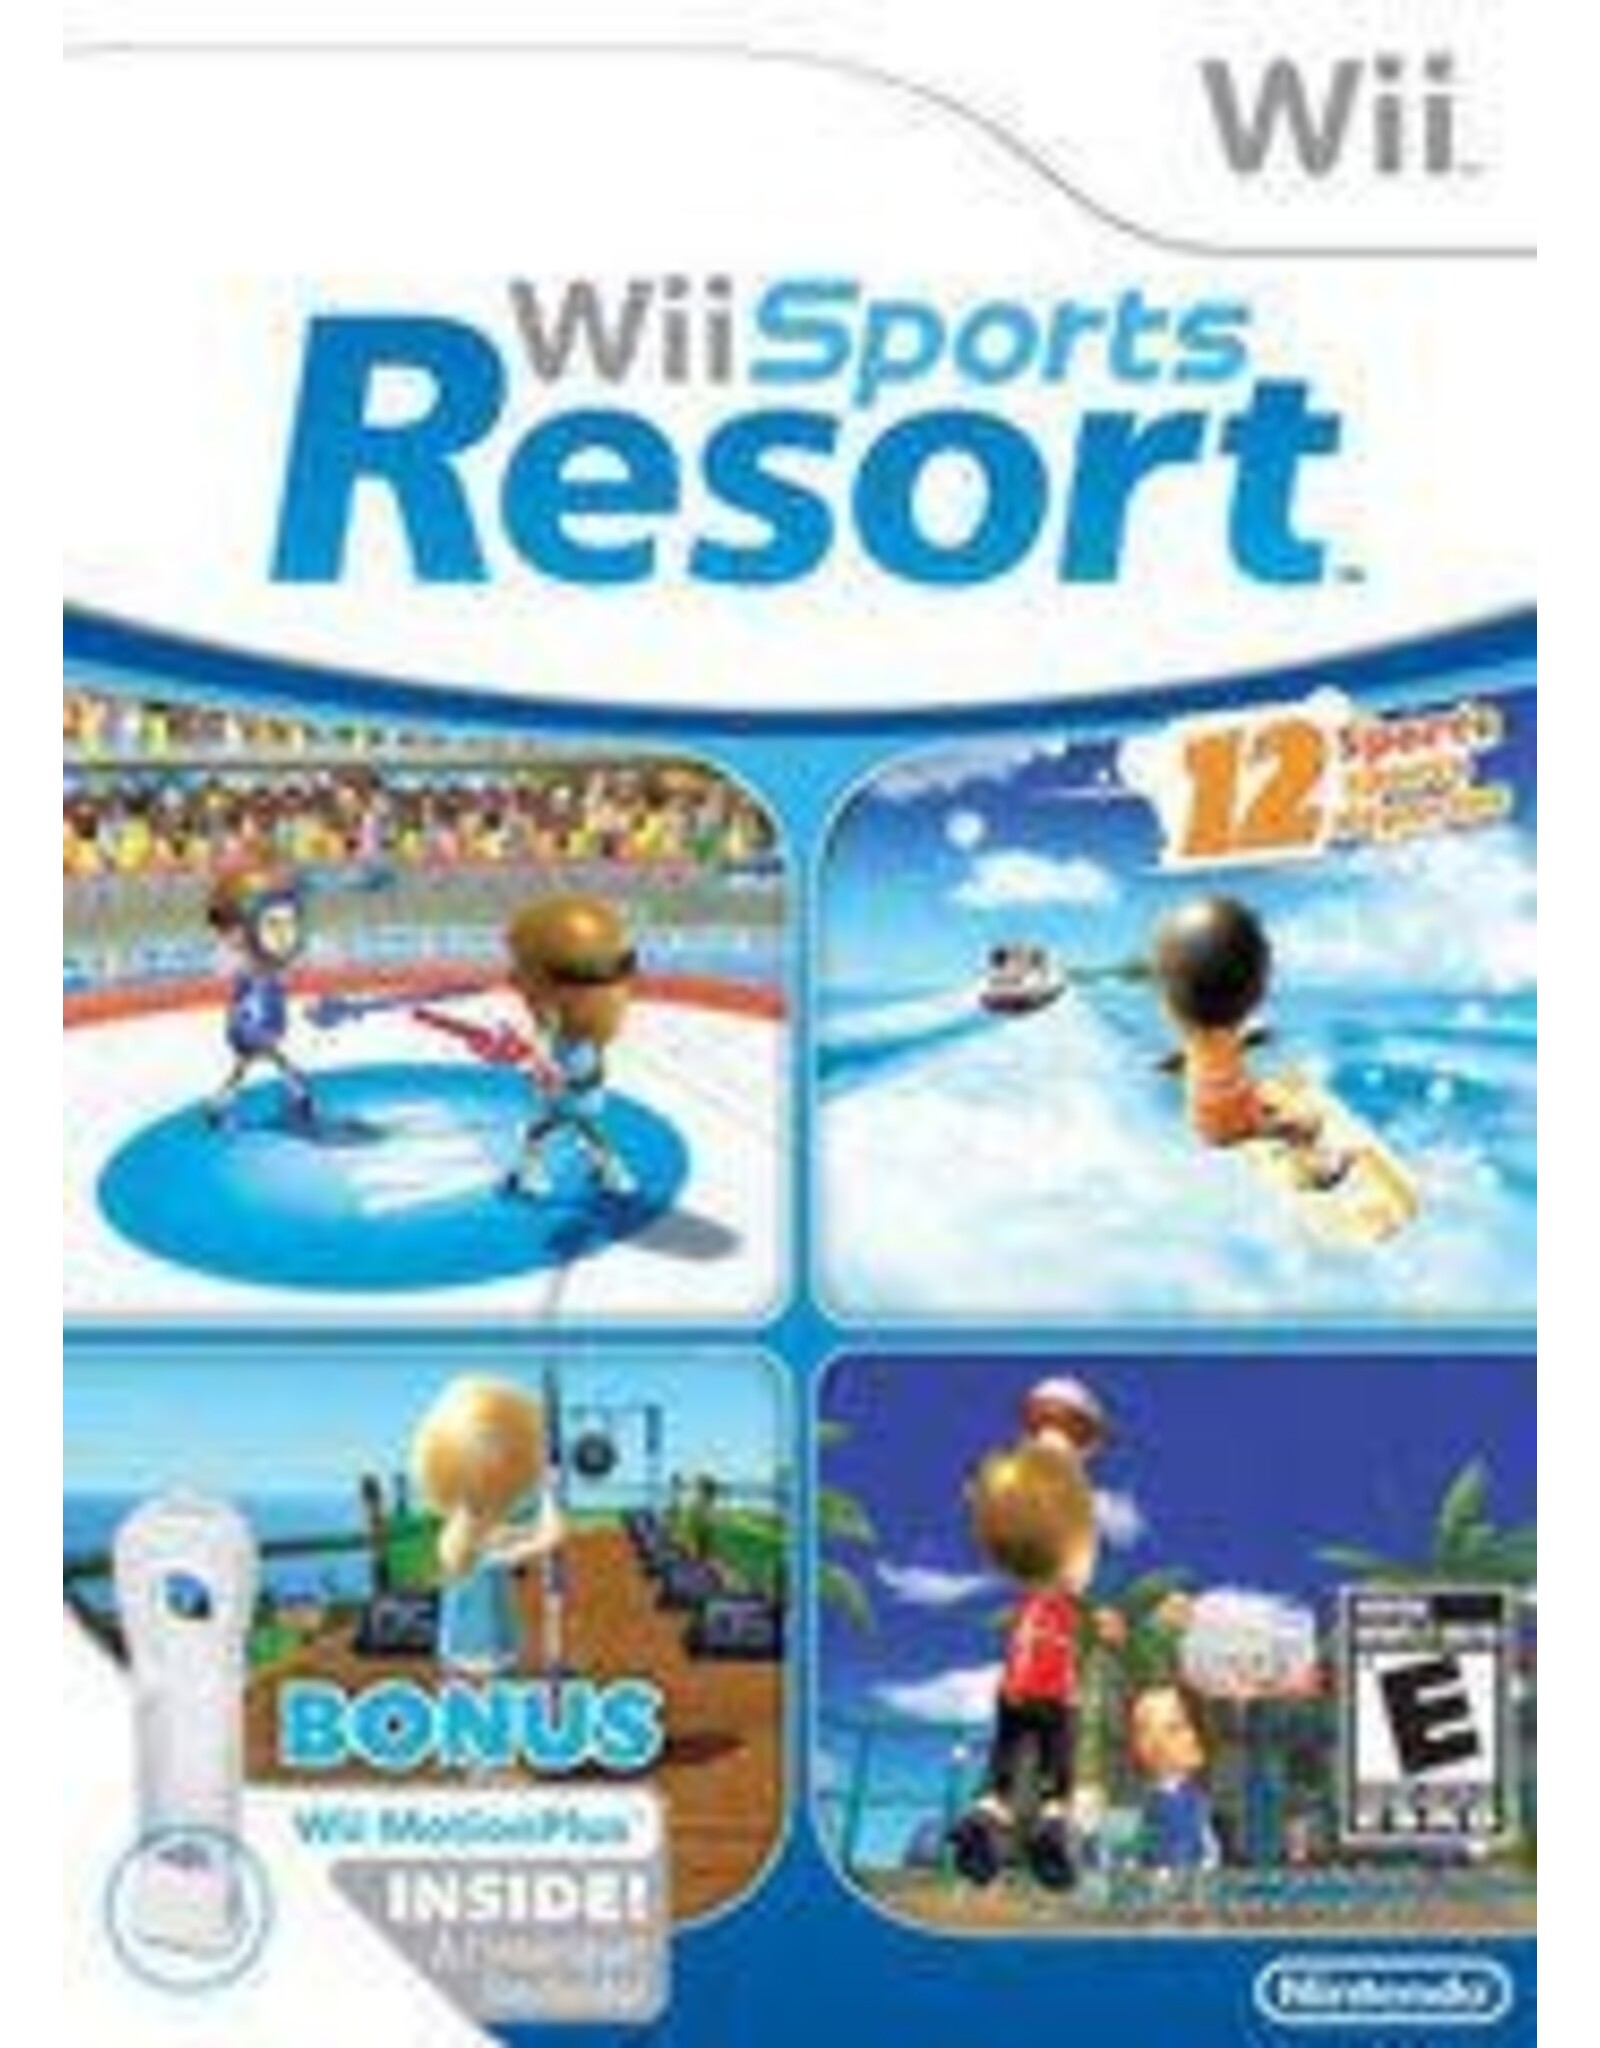 Wii Wii Sports Resort Wii MotionPlus Bundle - Missing Wii Remote Sleeve (Used)